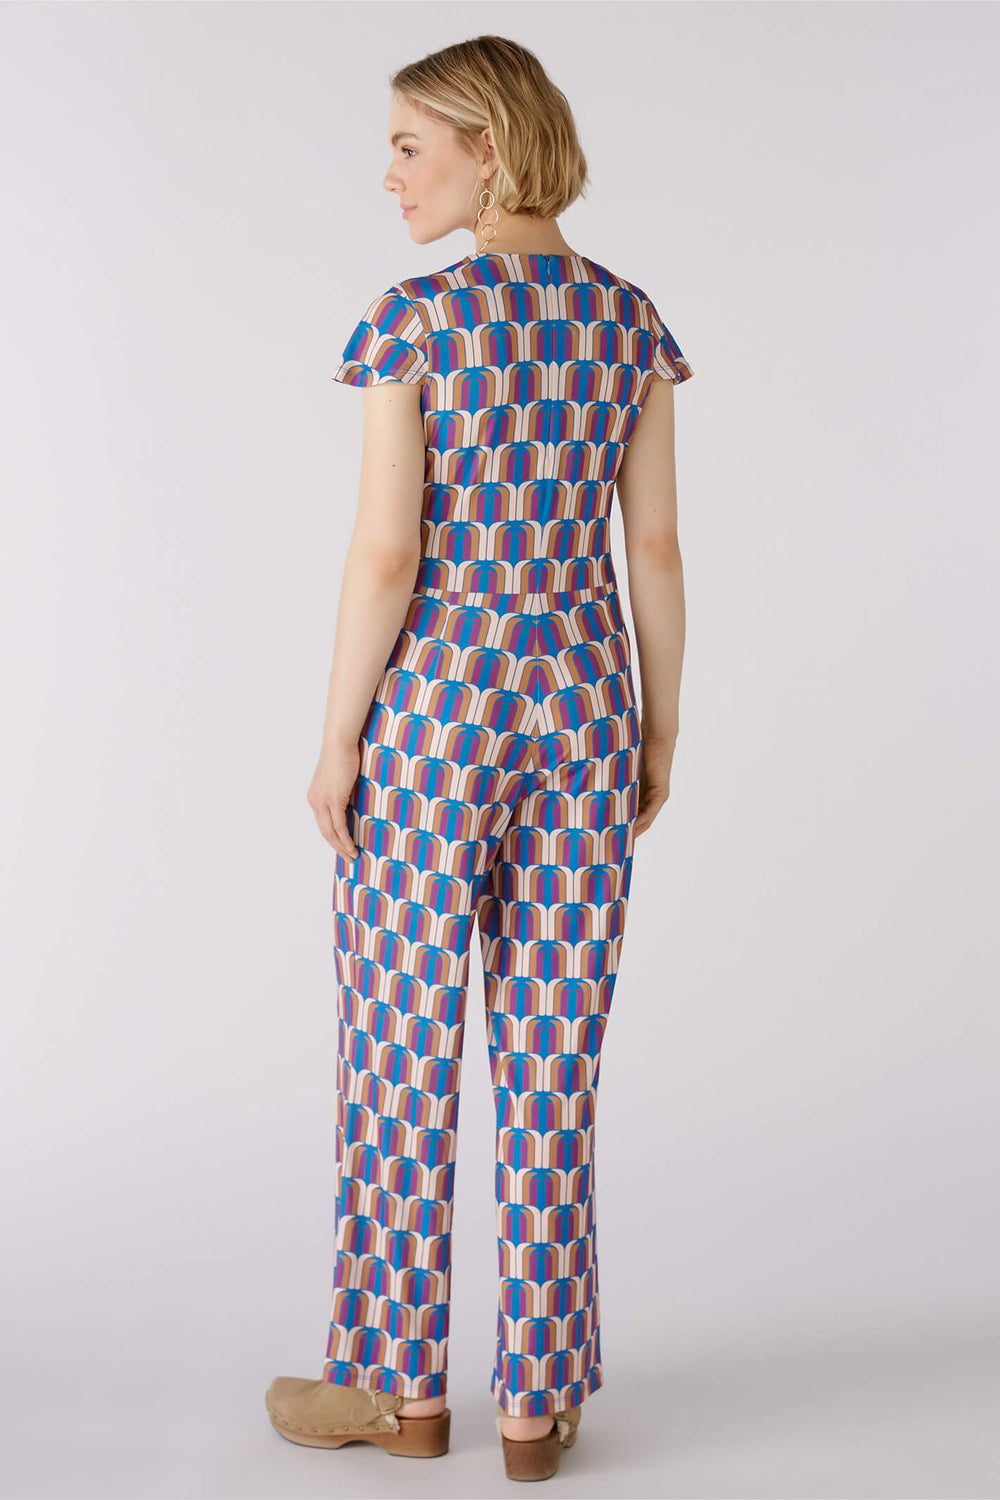 Oui 79212 Blue Lilac Print Jumpsuit - Olivia Grace Fashion